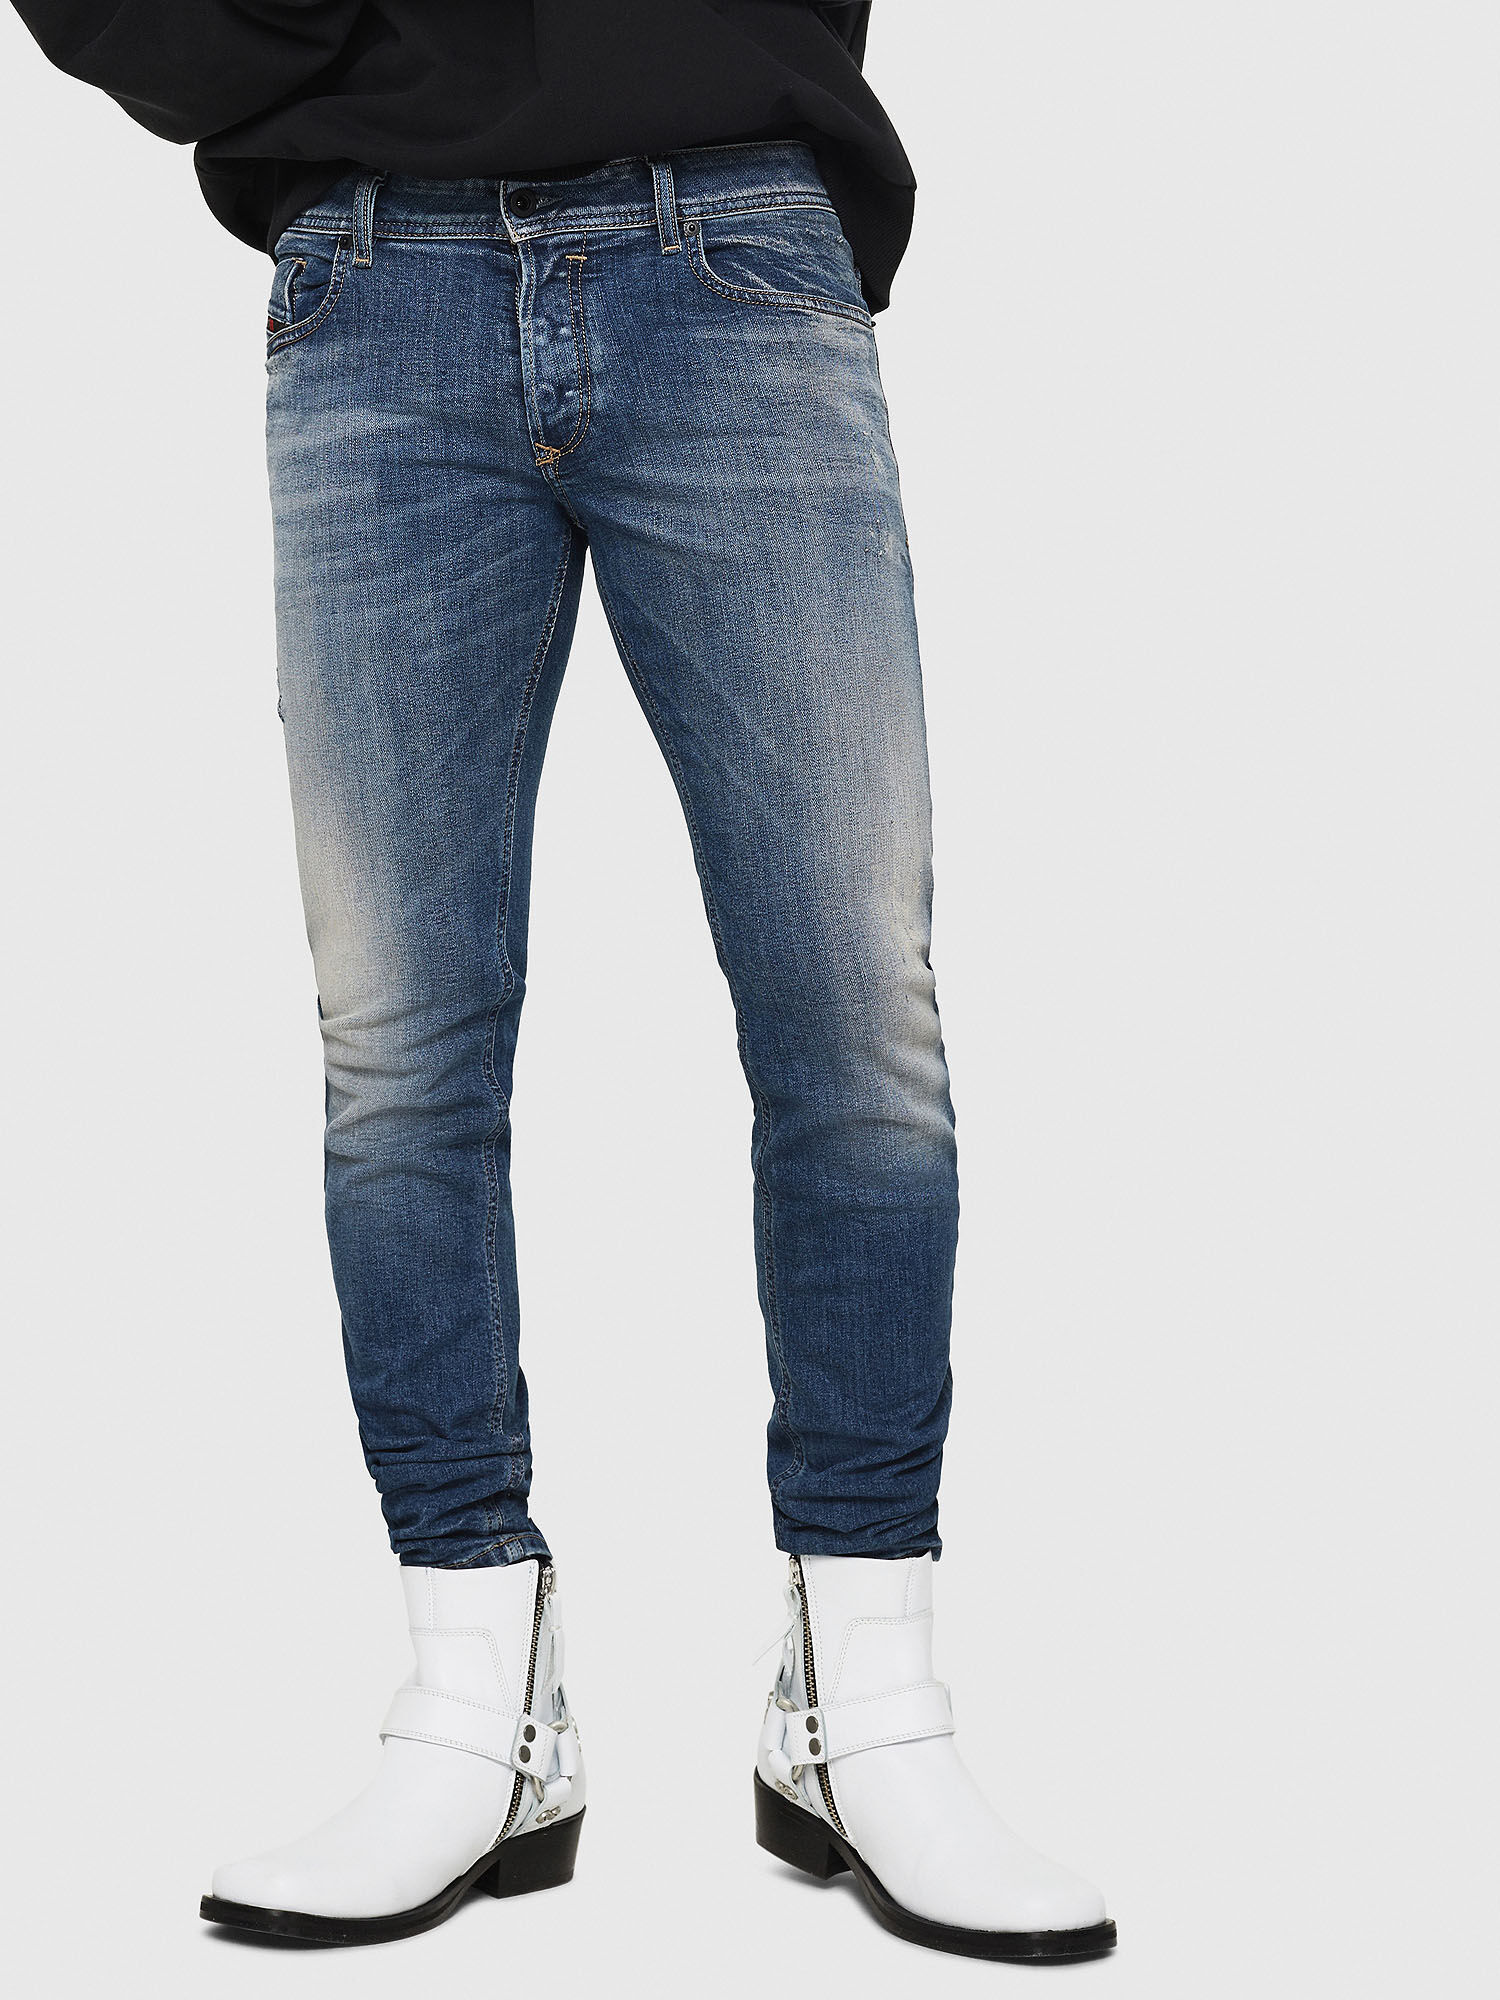 short bege feminino jeans